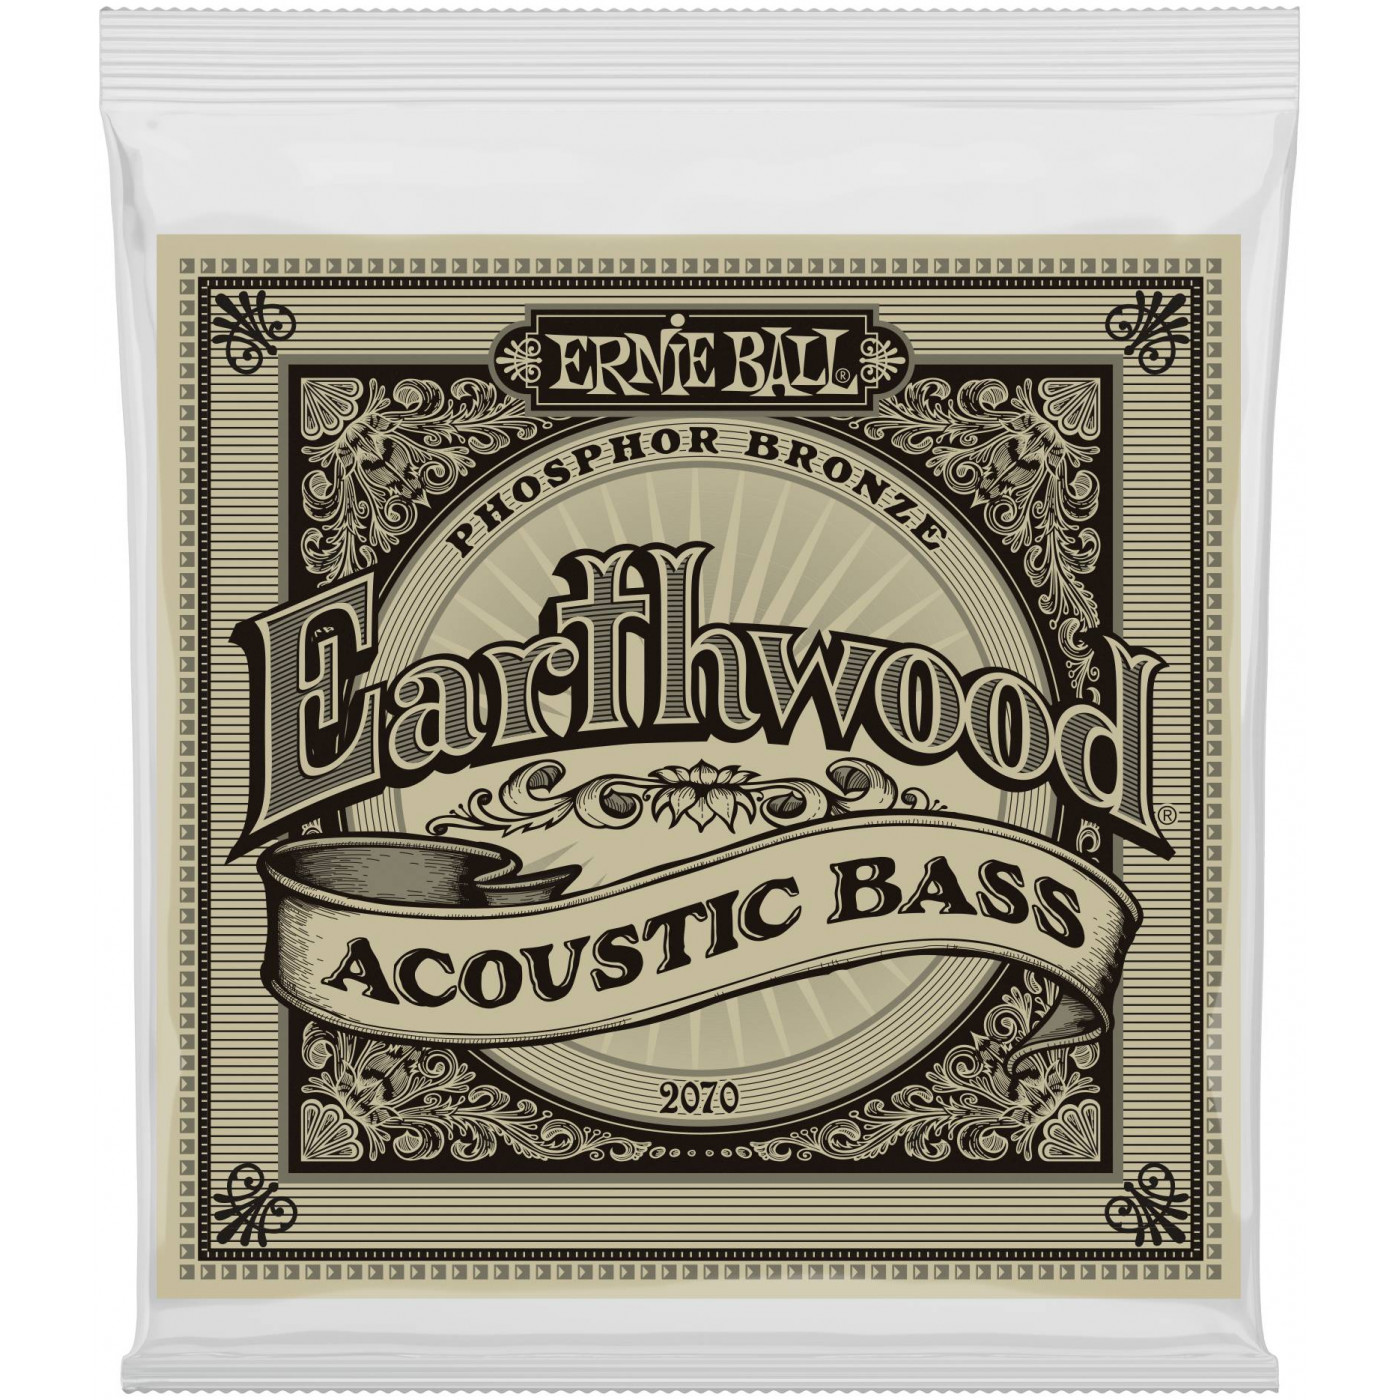 Струны Ernie Ball 2070 Earthwood Acoustic Bass струны для акустической гитары orphee сtx620 c 010 047